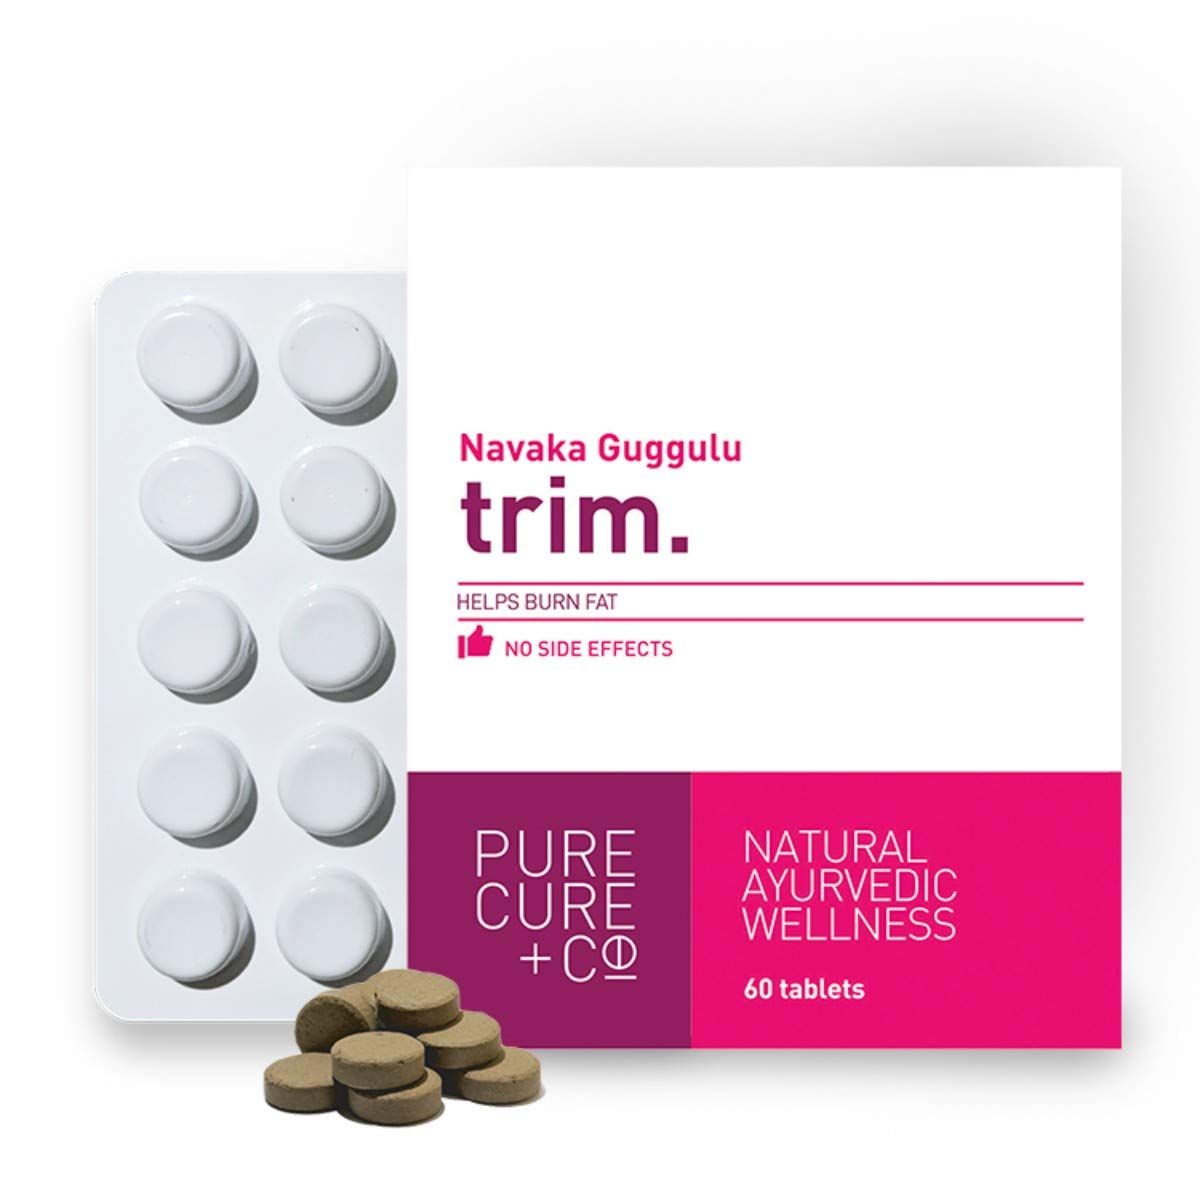 Pure Cure +Co Navaka Guggulu Trim Tablets Image